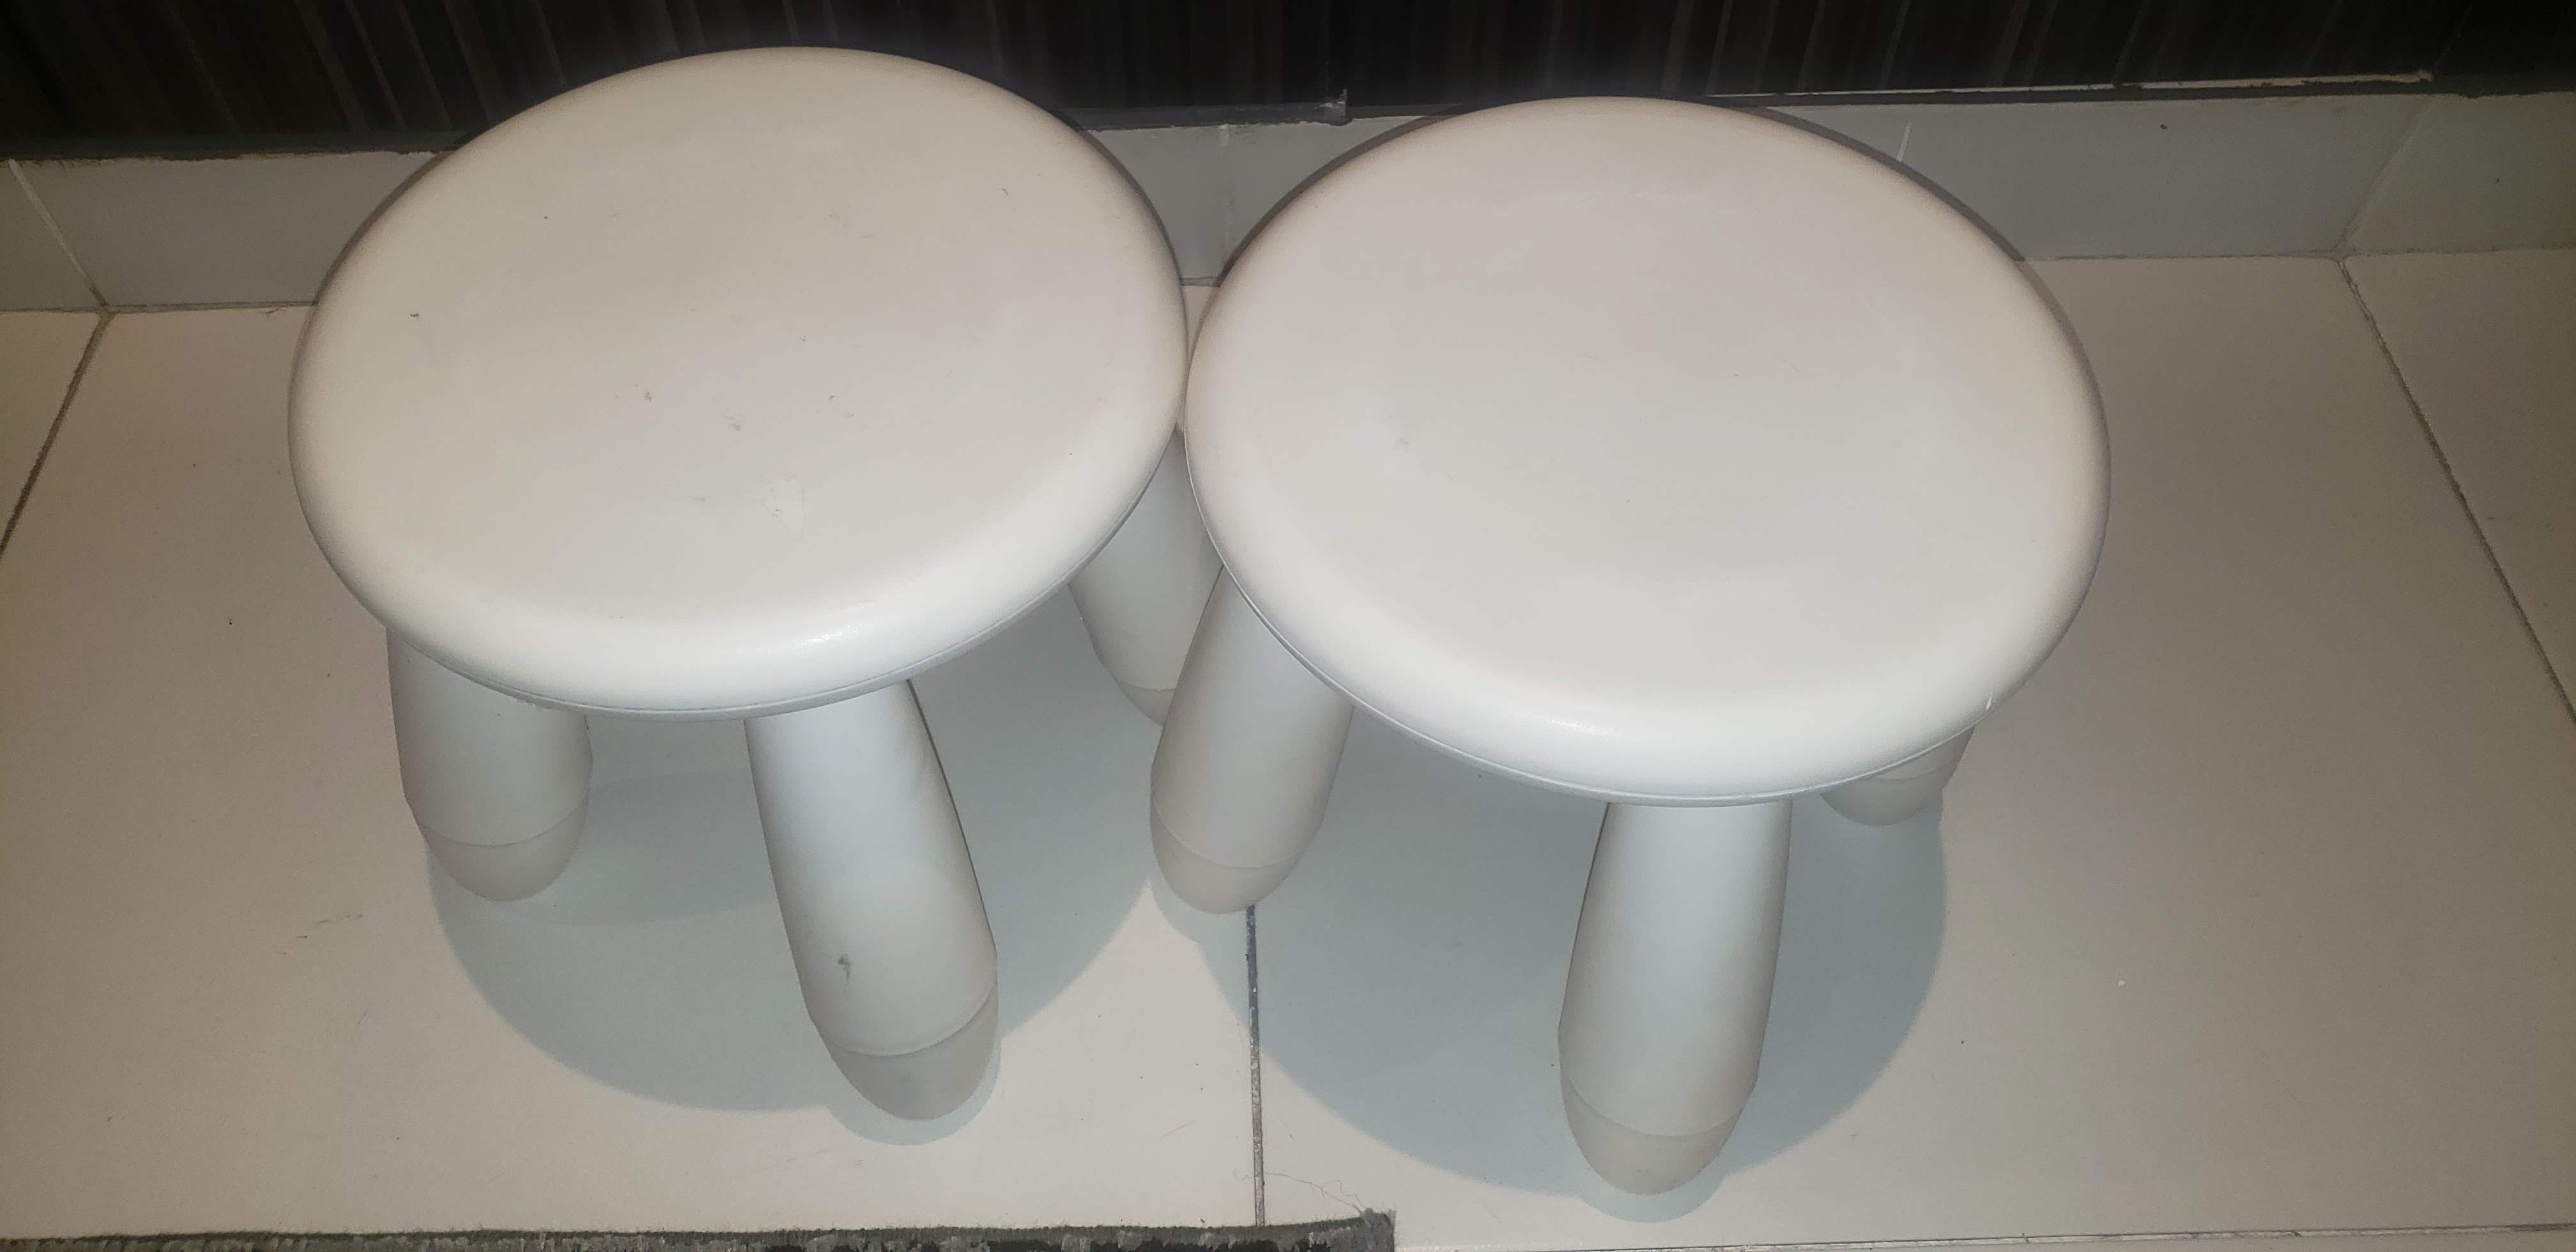 muebles - Taburete Blanco
(2) dos taburetes